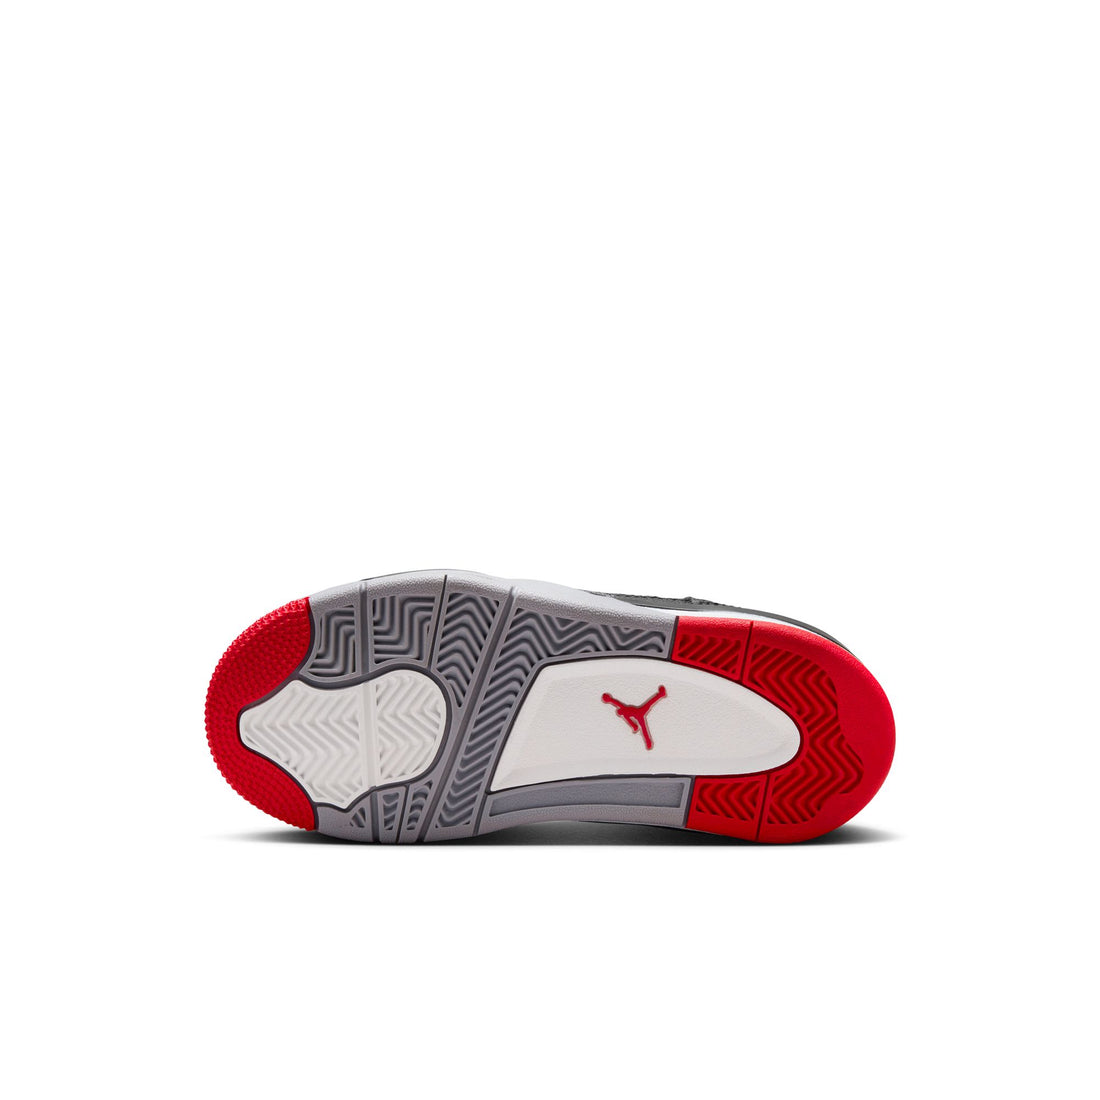 Air Jordan 4 Retro PS (Black/Fire Red/Cement Grey)